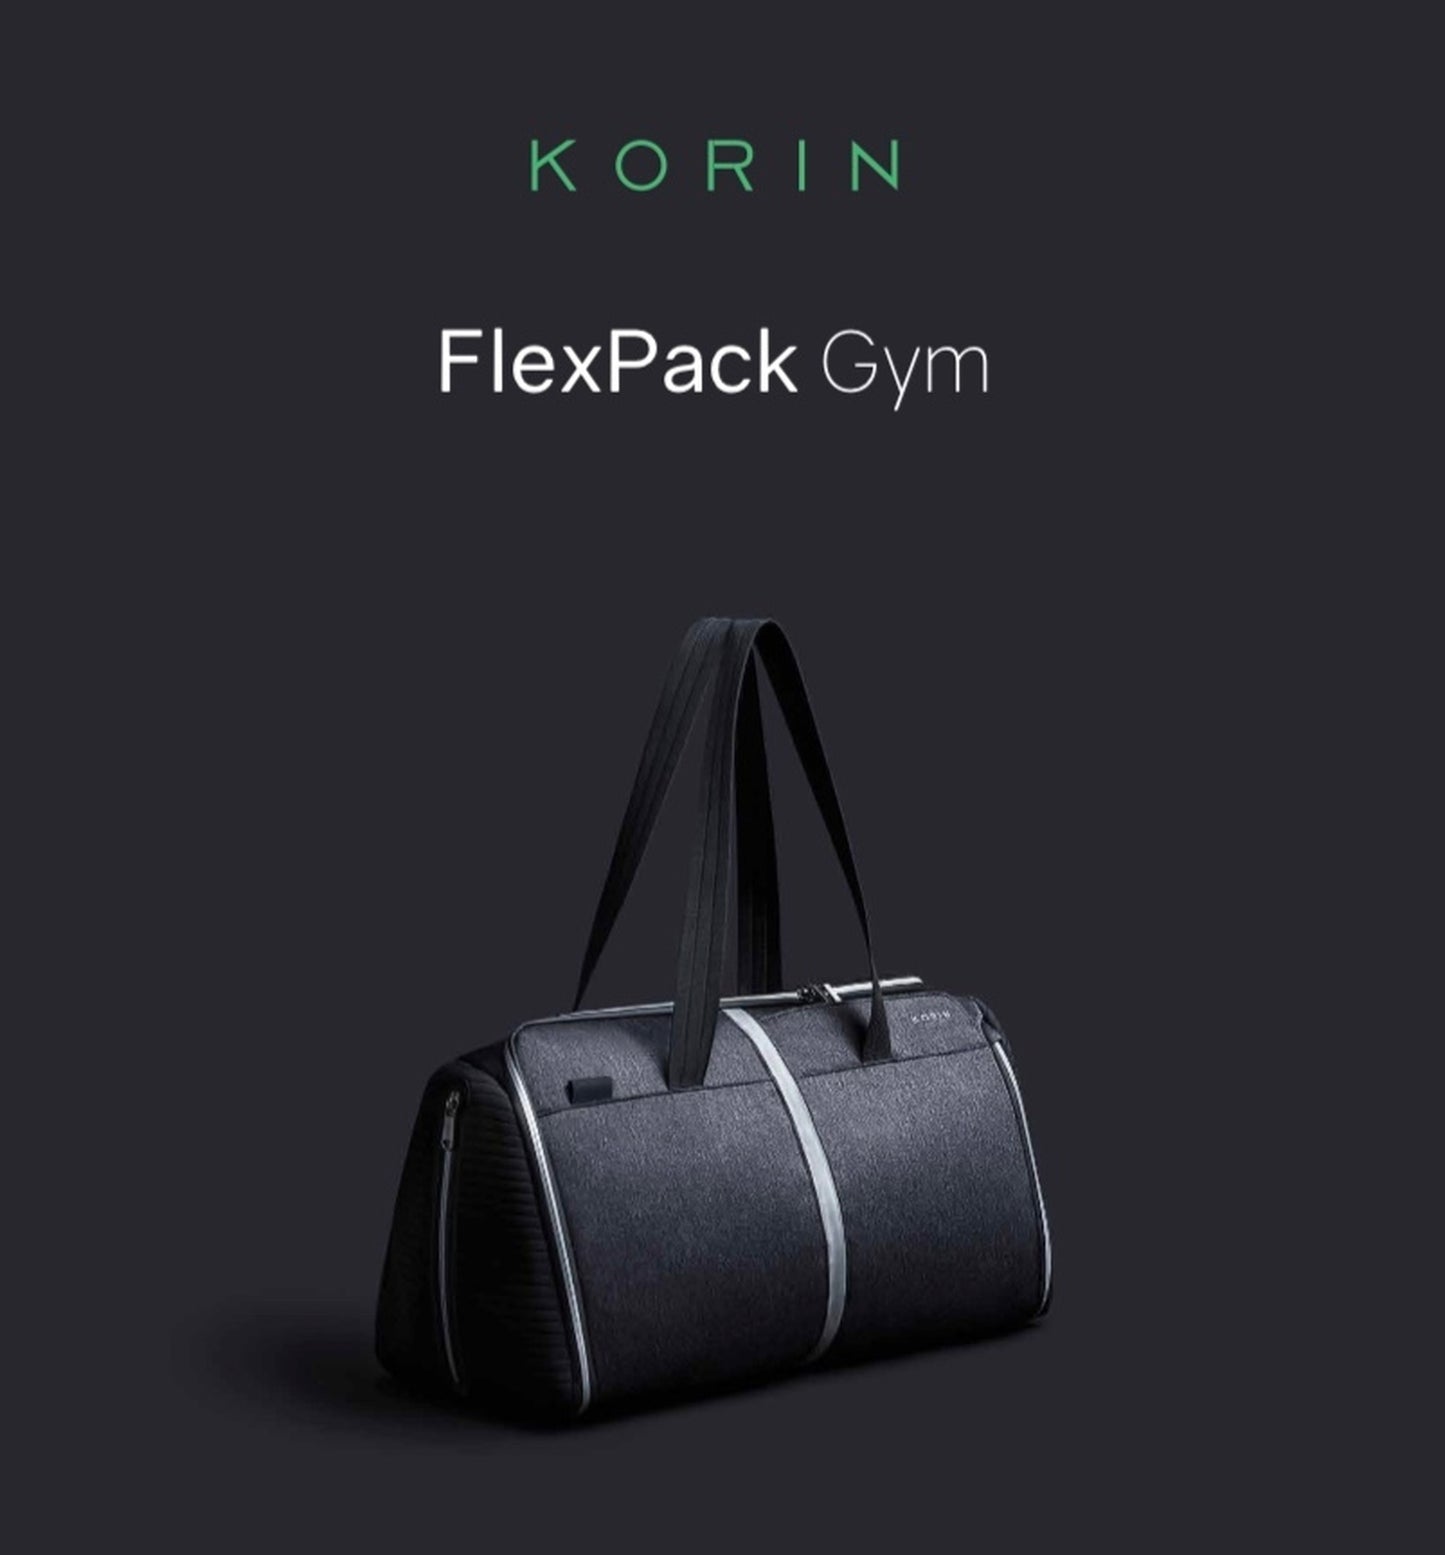 FlexPack Gym Korin Design フレックスパックジム コリンデザイン ショルダーバッグ